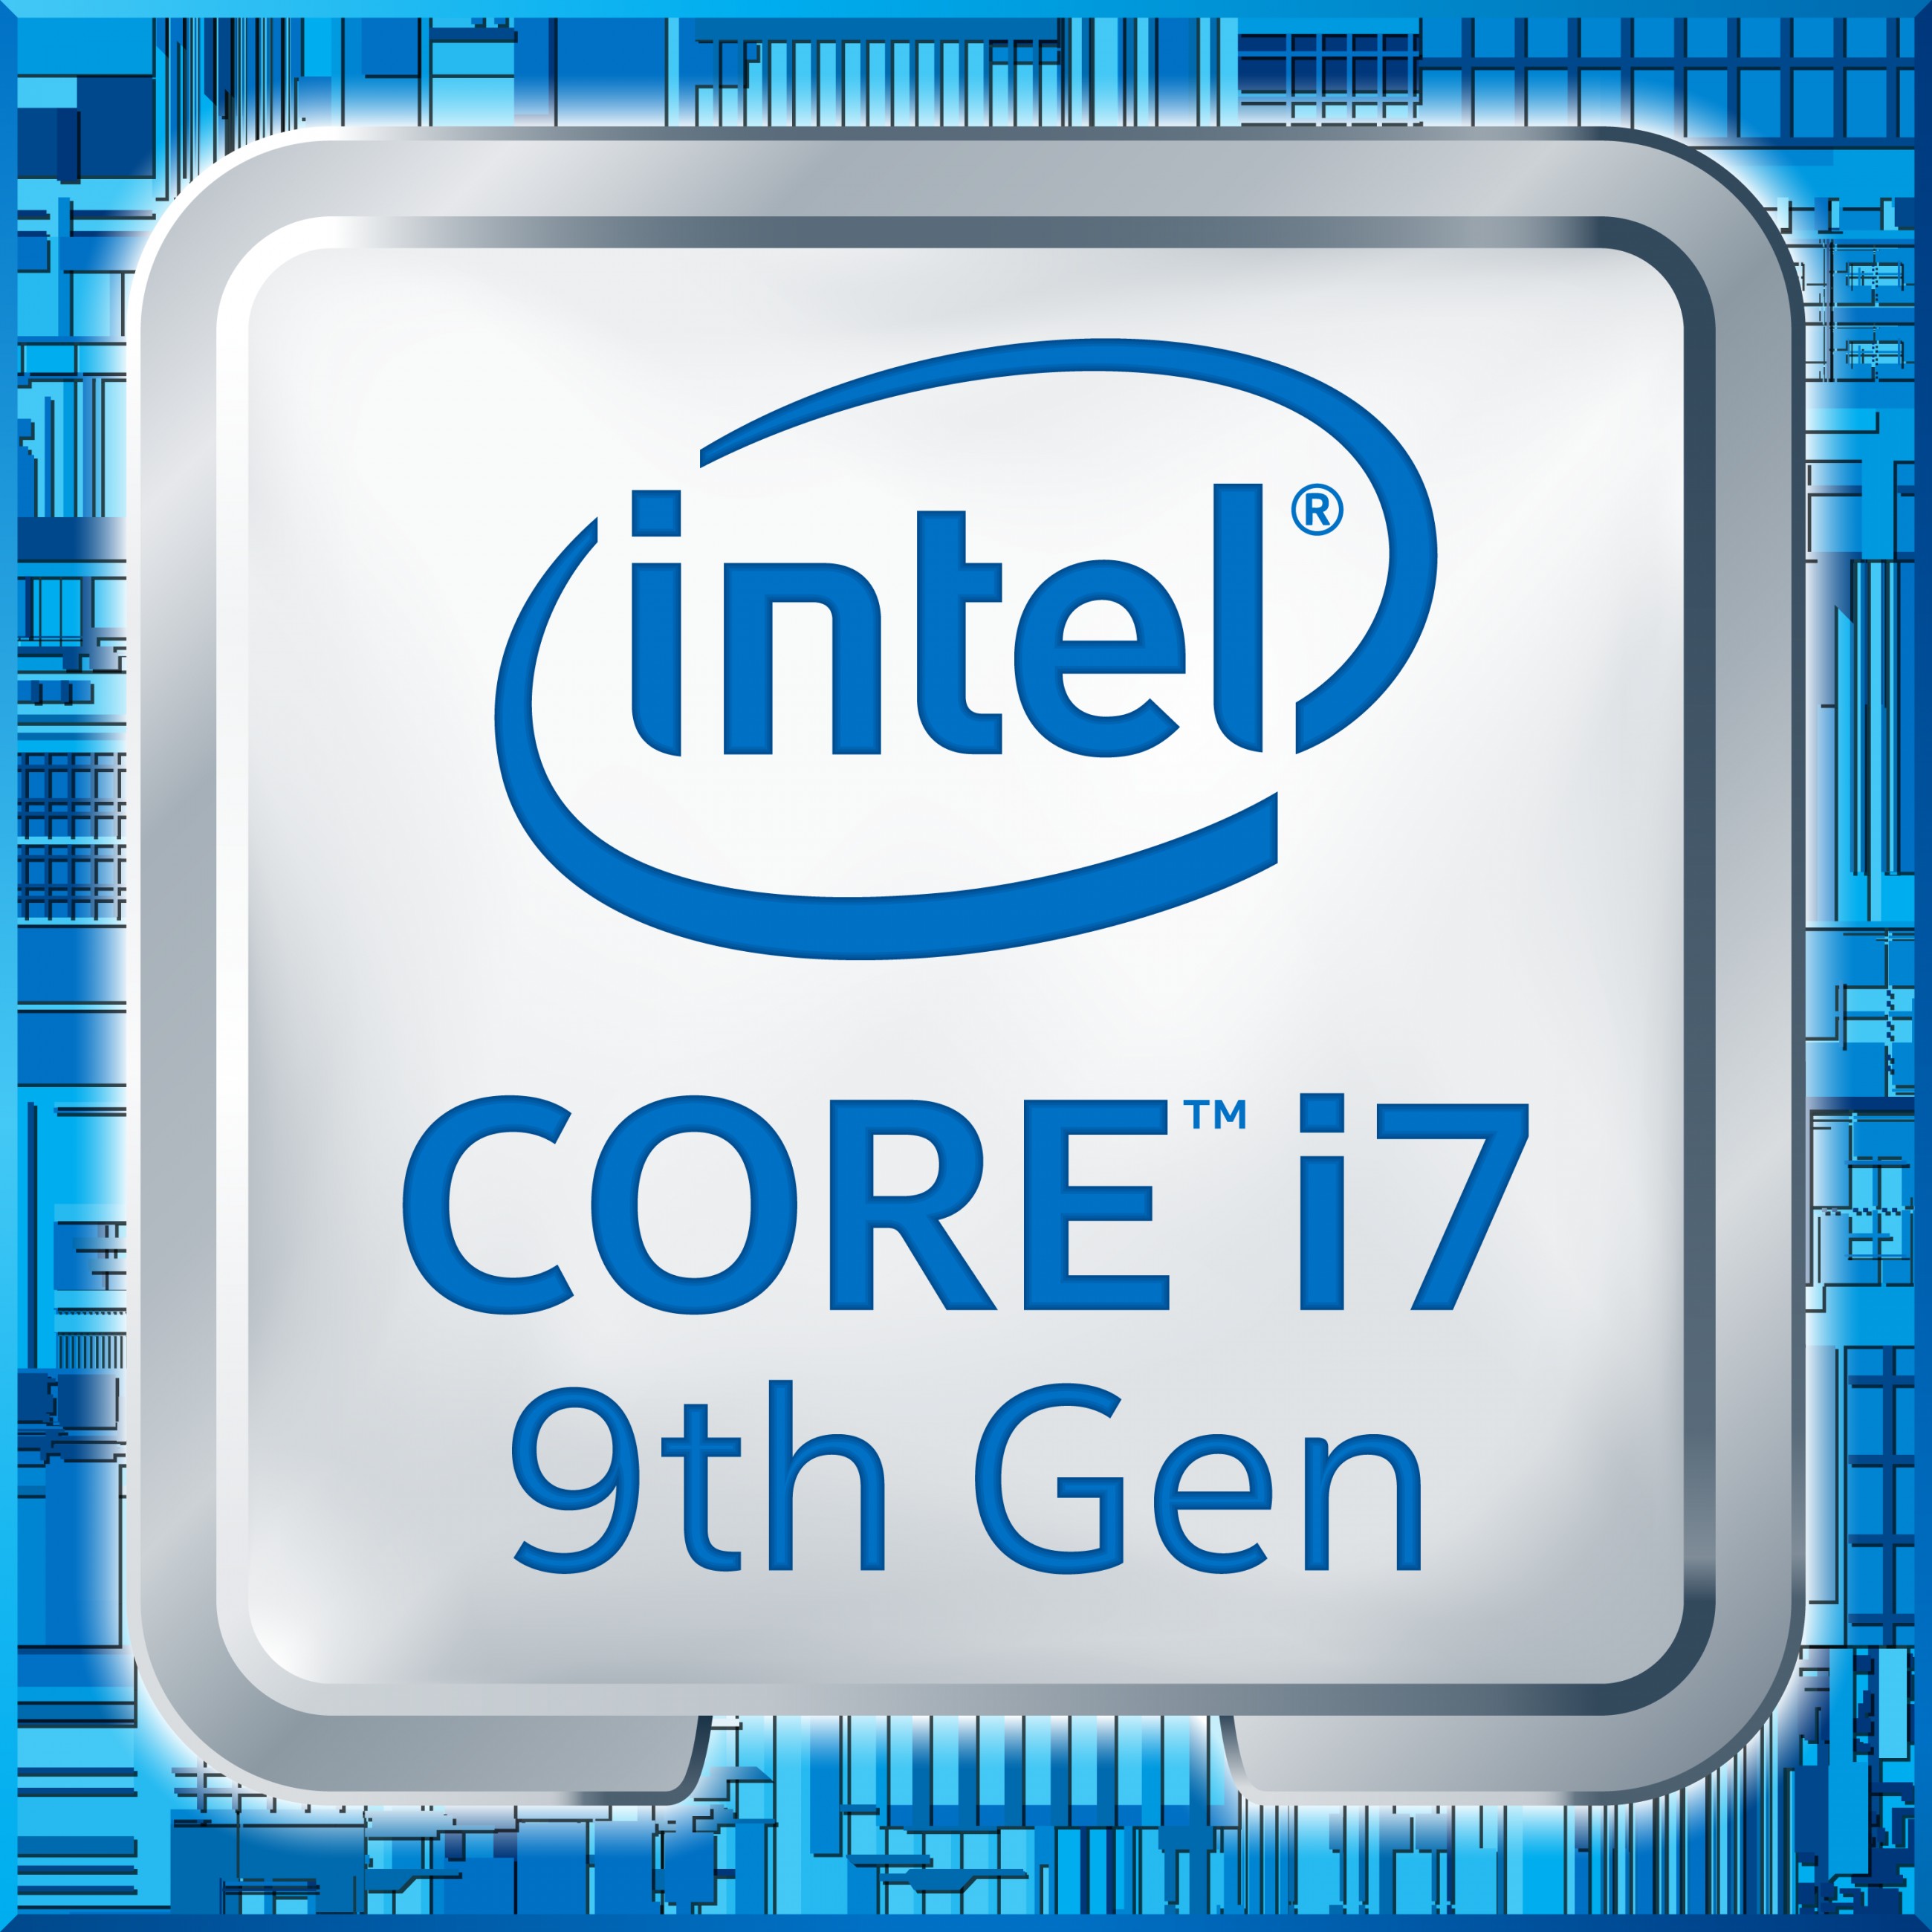 Intel Core i7-9700 processor - CM8068403874521